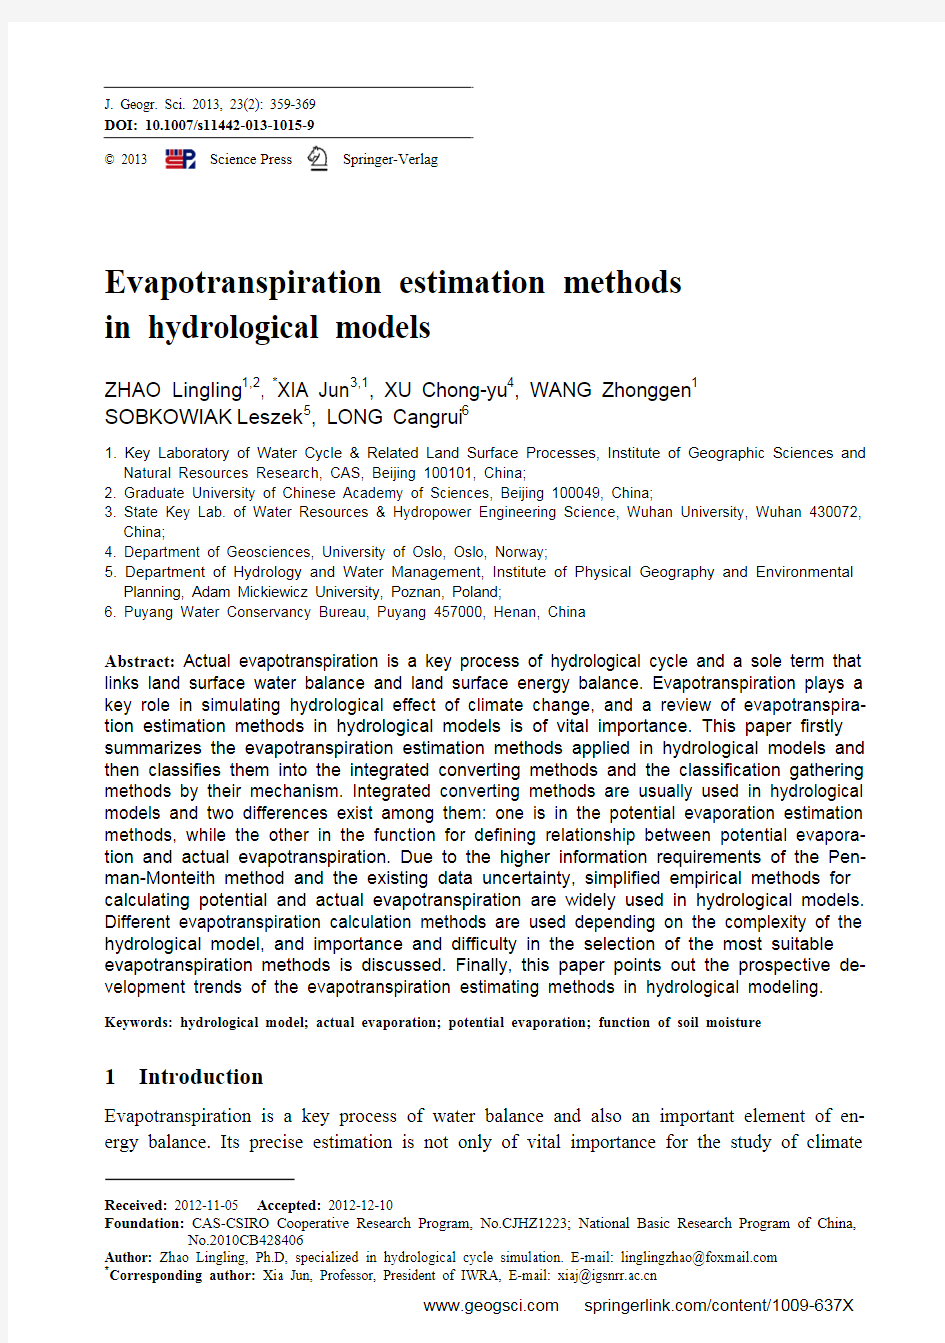 Evapotranspiration estimation methods in hydrological model